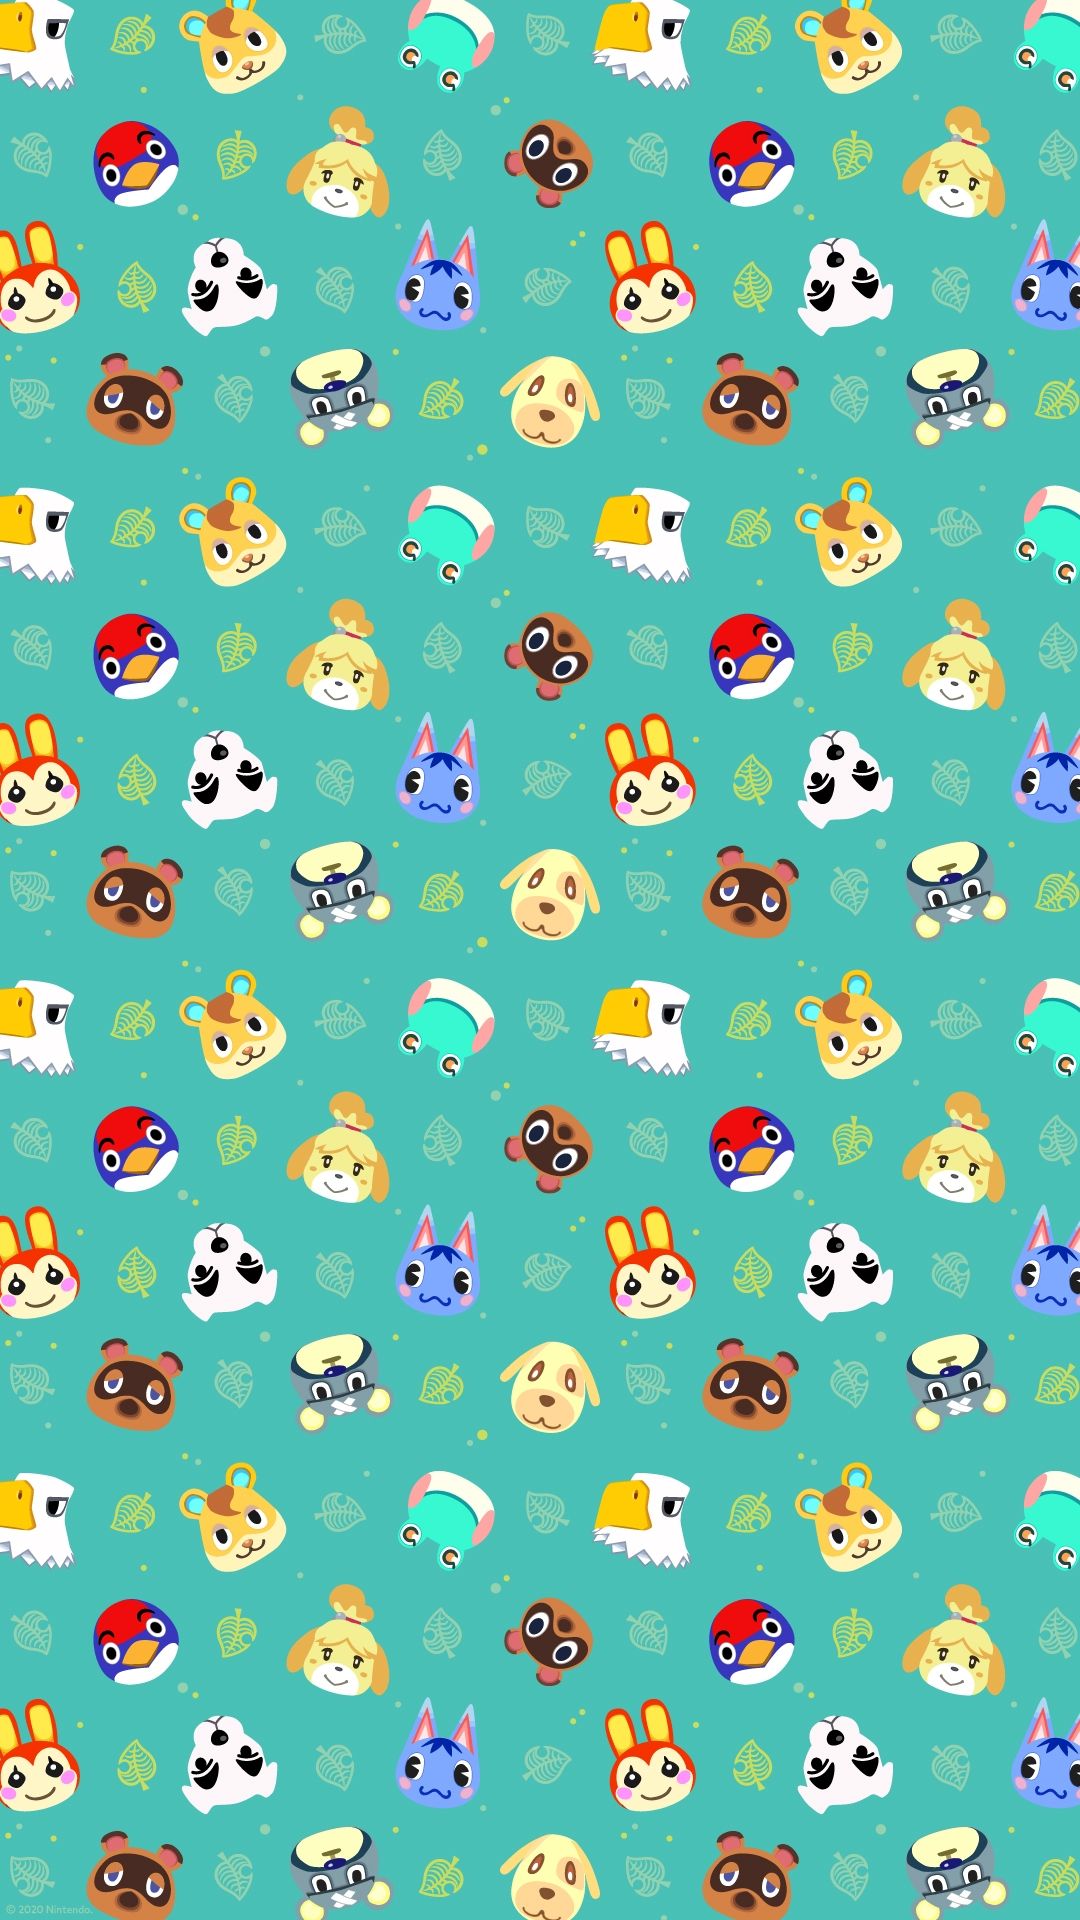 Animal Crossing iPhone wallpaper pack